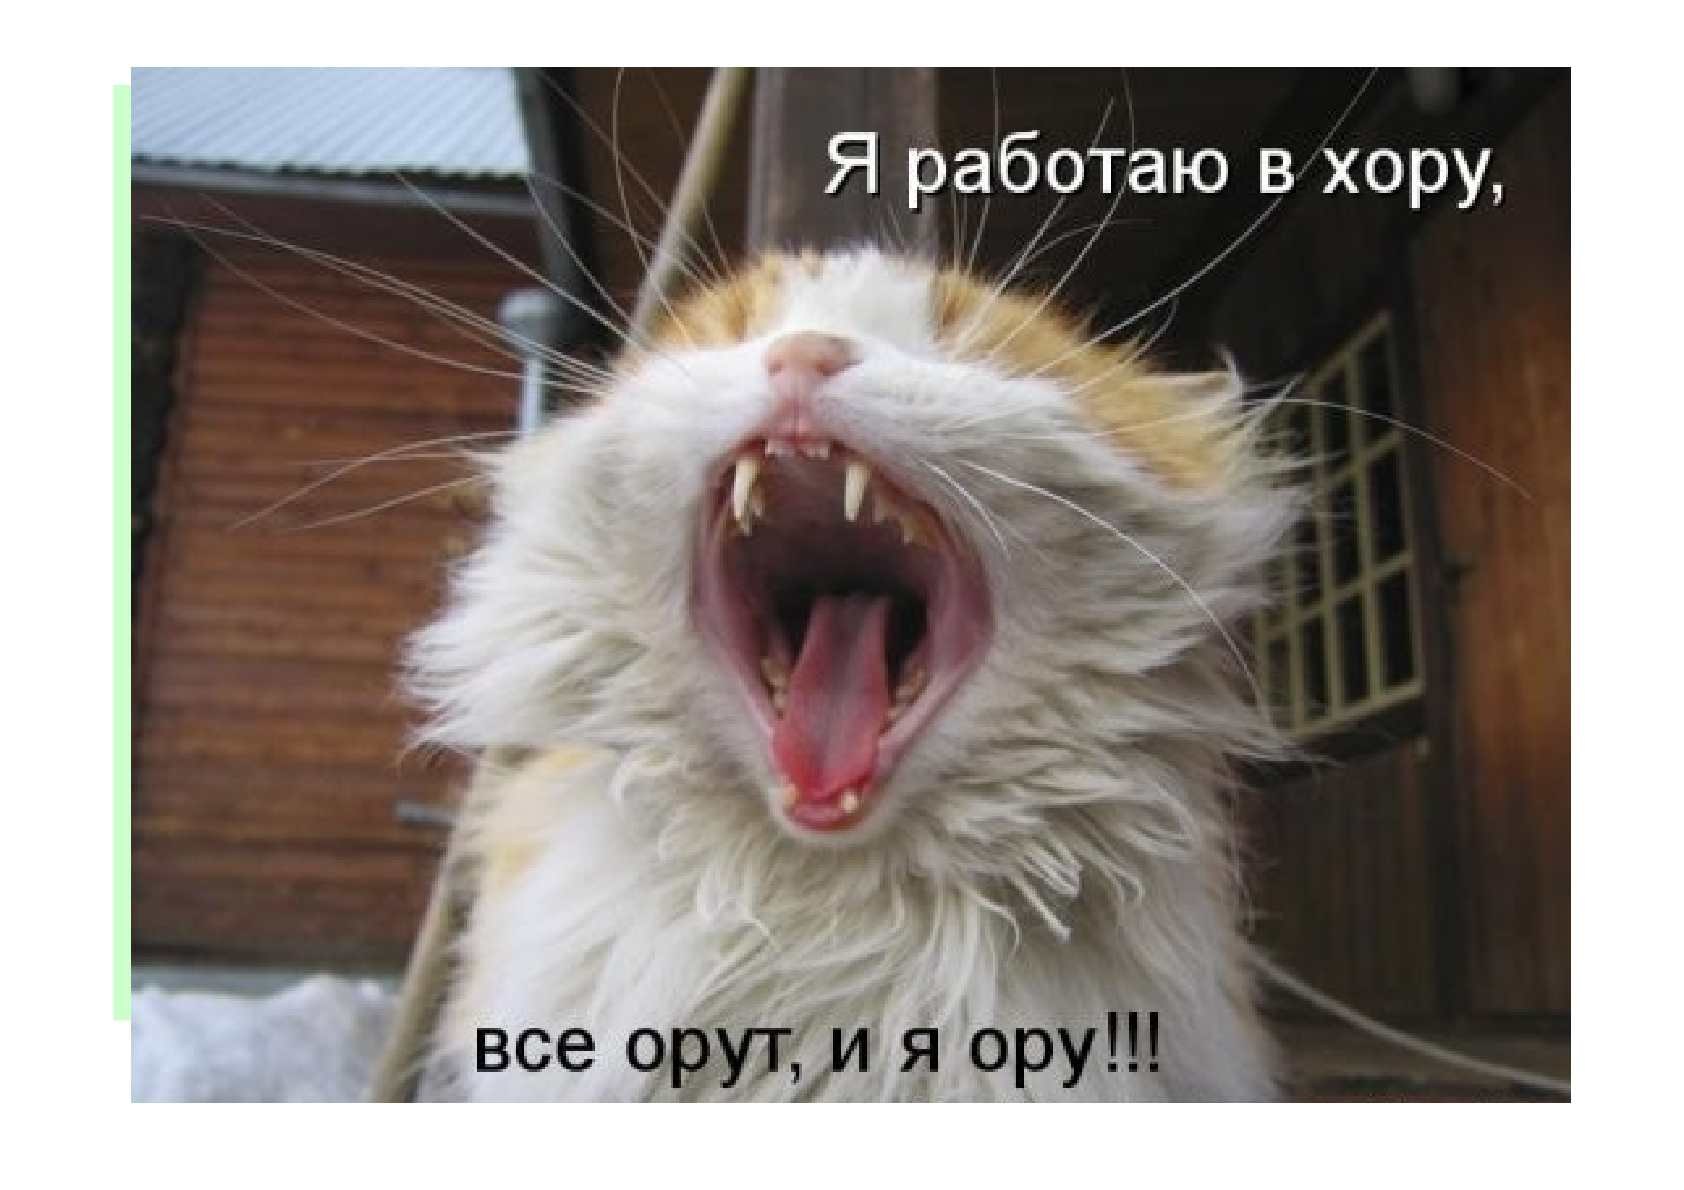 Я вою я пою. Кот кричит. Орущий кот. Смешной орущий кот. Коты в марте орут.